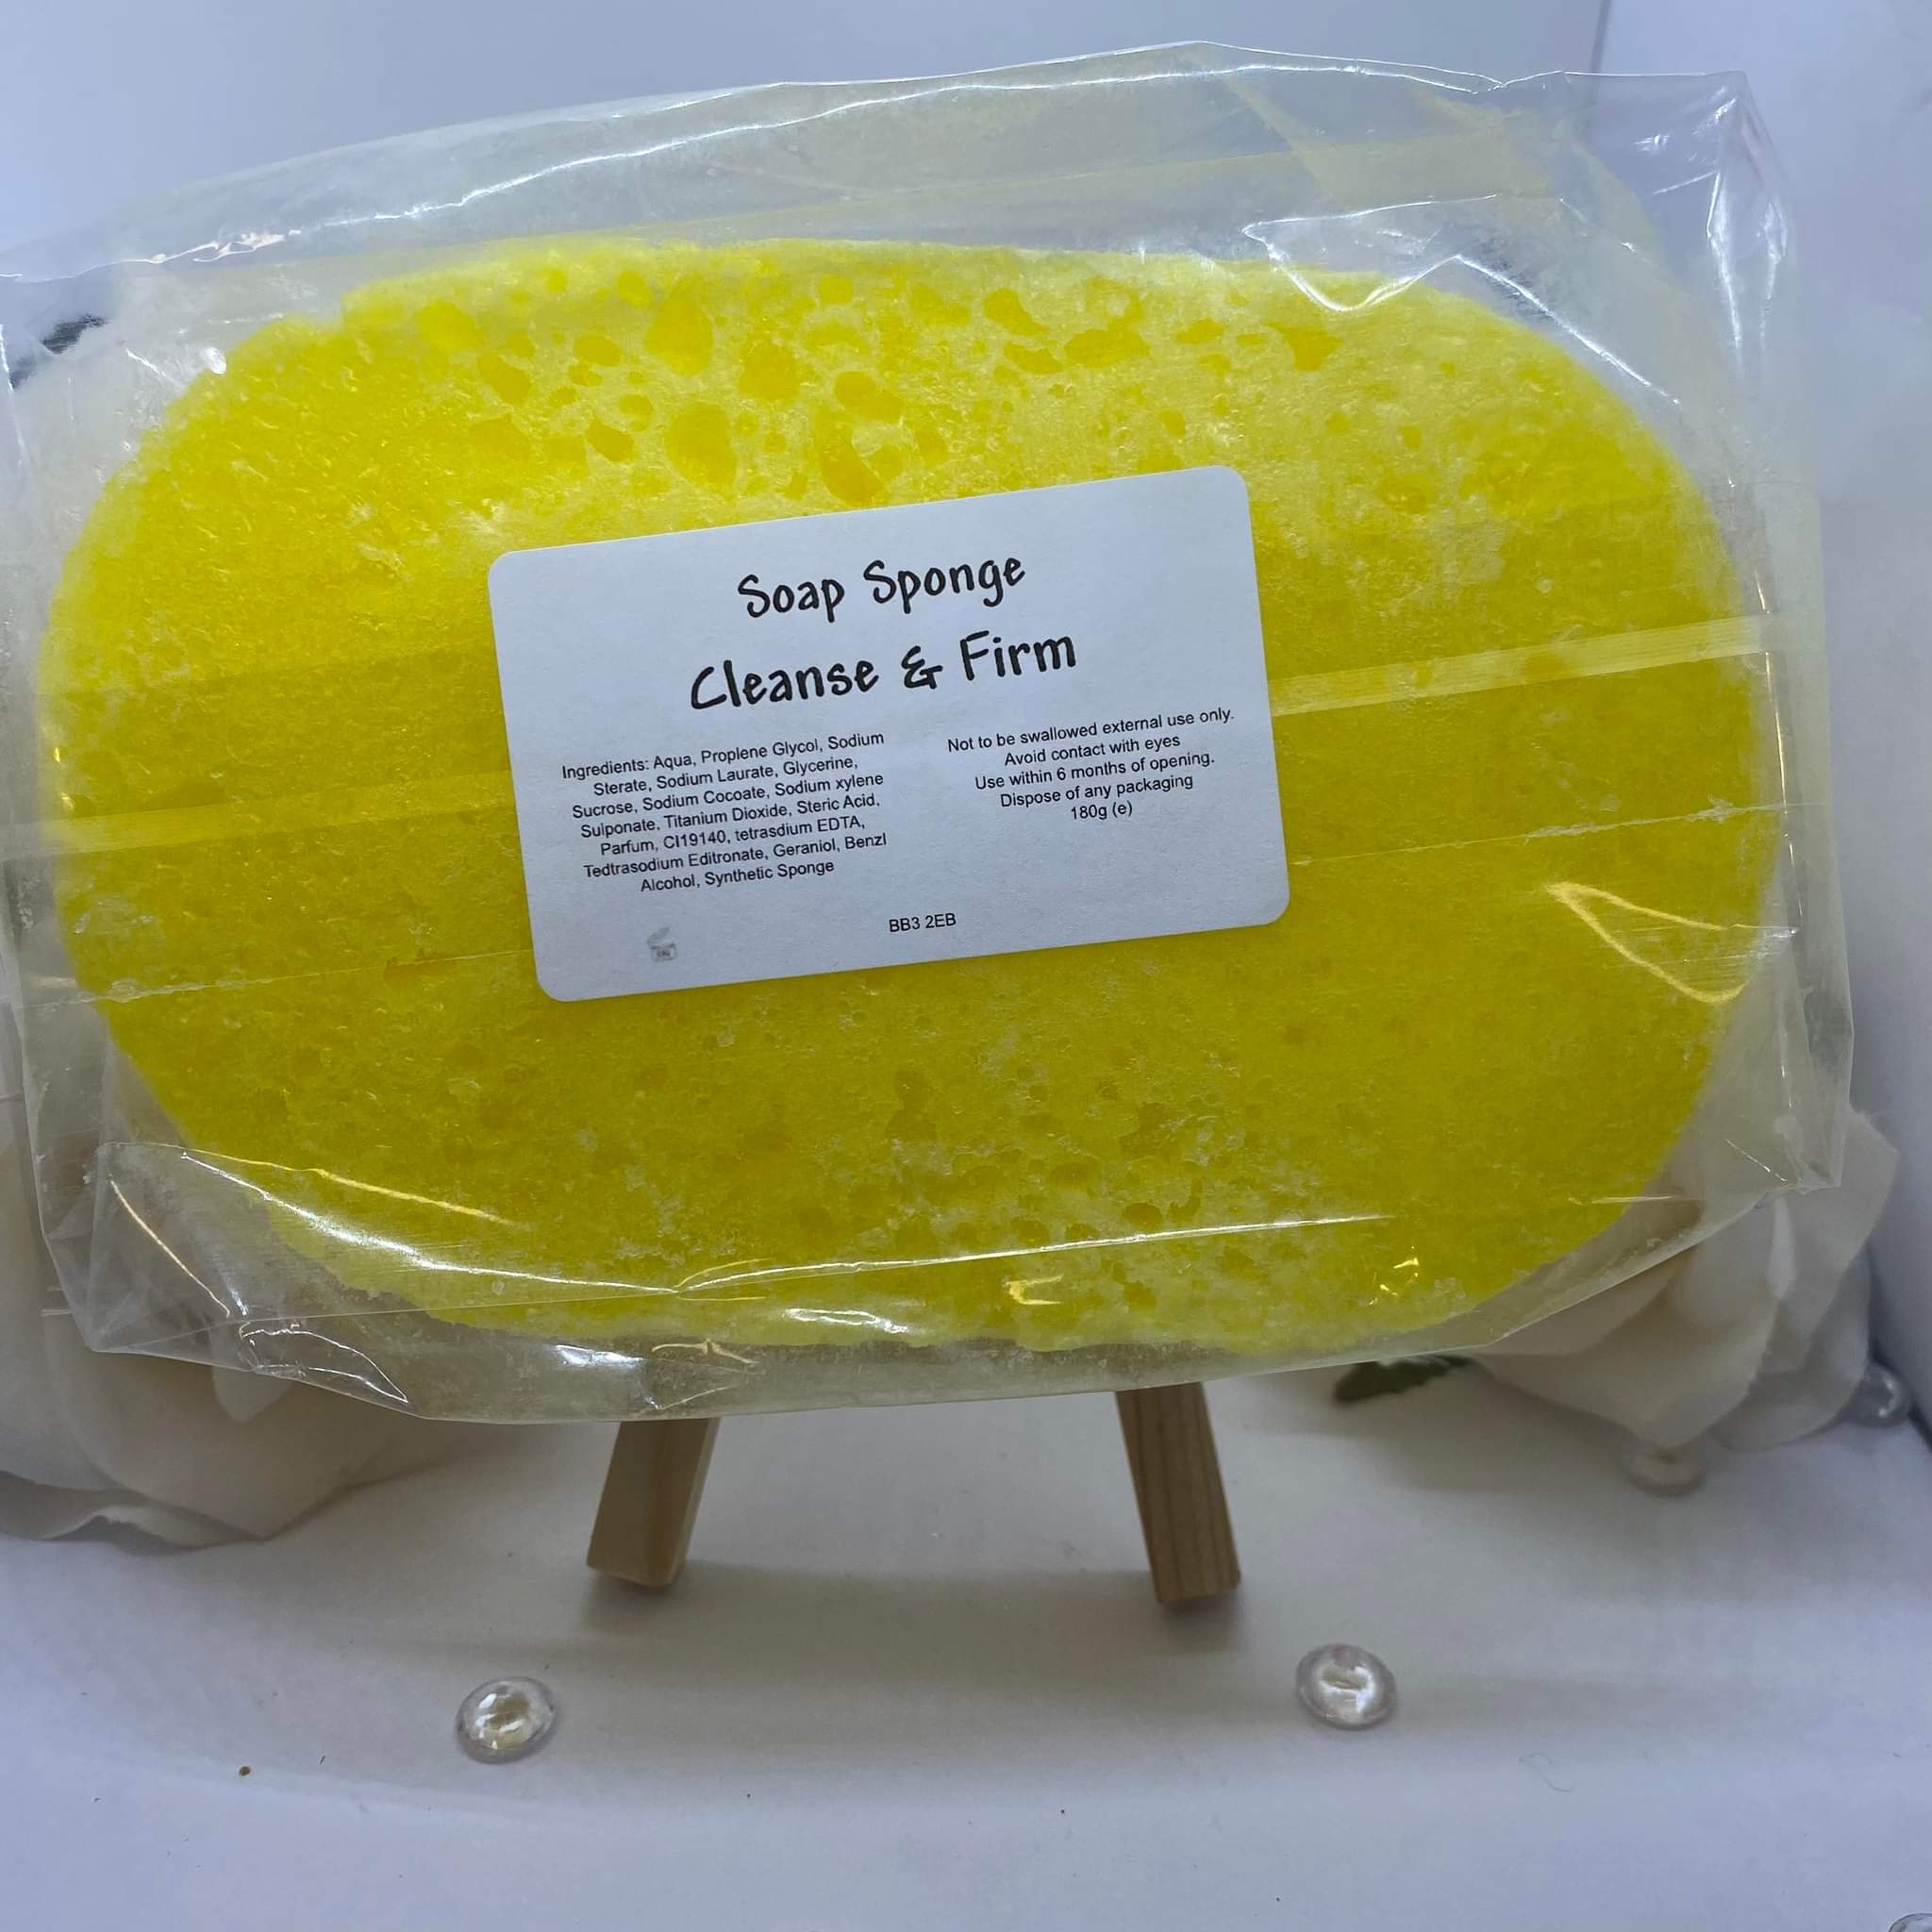 Cleanse & Firm Soap Sponge